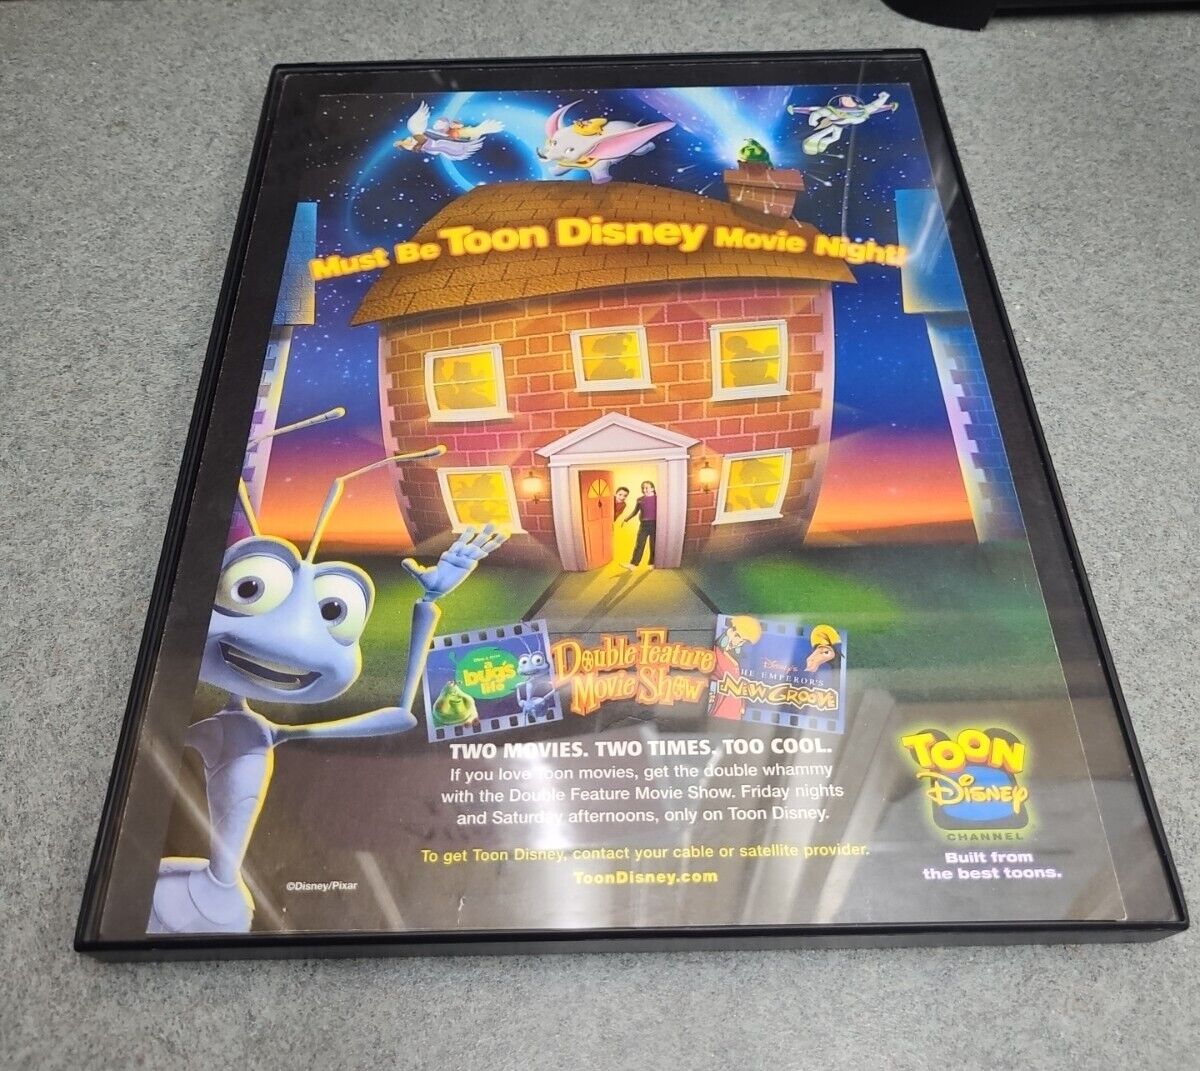 Toon Disney Channel Print Ad 2003 Framed 8.5x11 